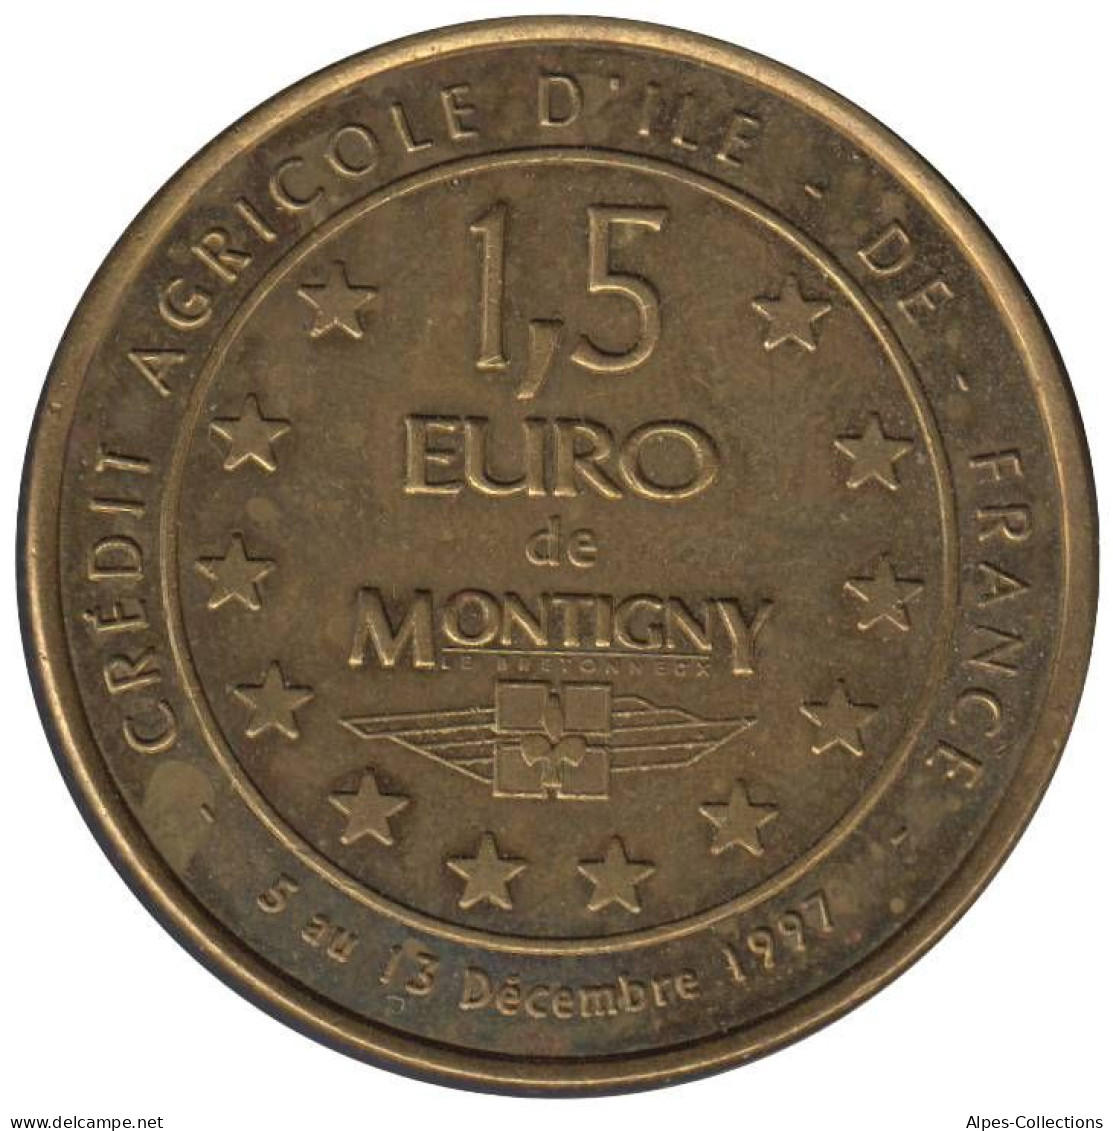 MONTIGNY - EU0015.1 - 1,5 EURO DES VILLES - Réf: NR - 1997 - Euros Of The Cities